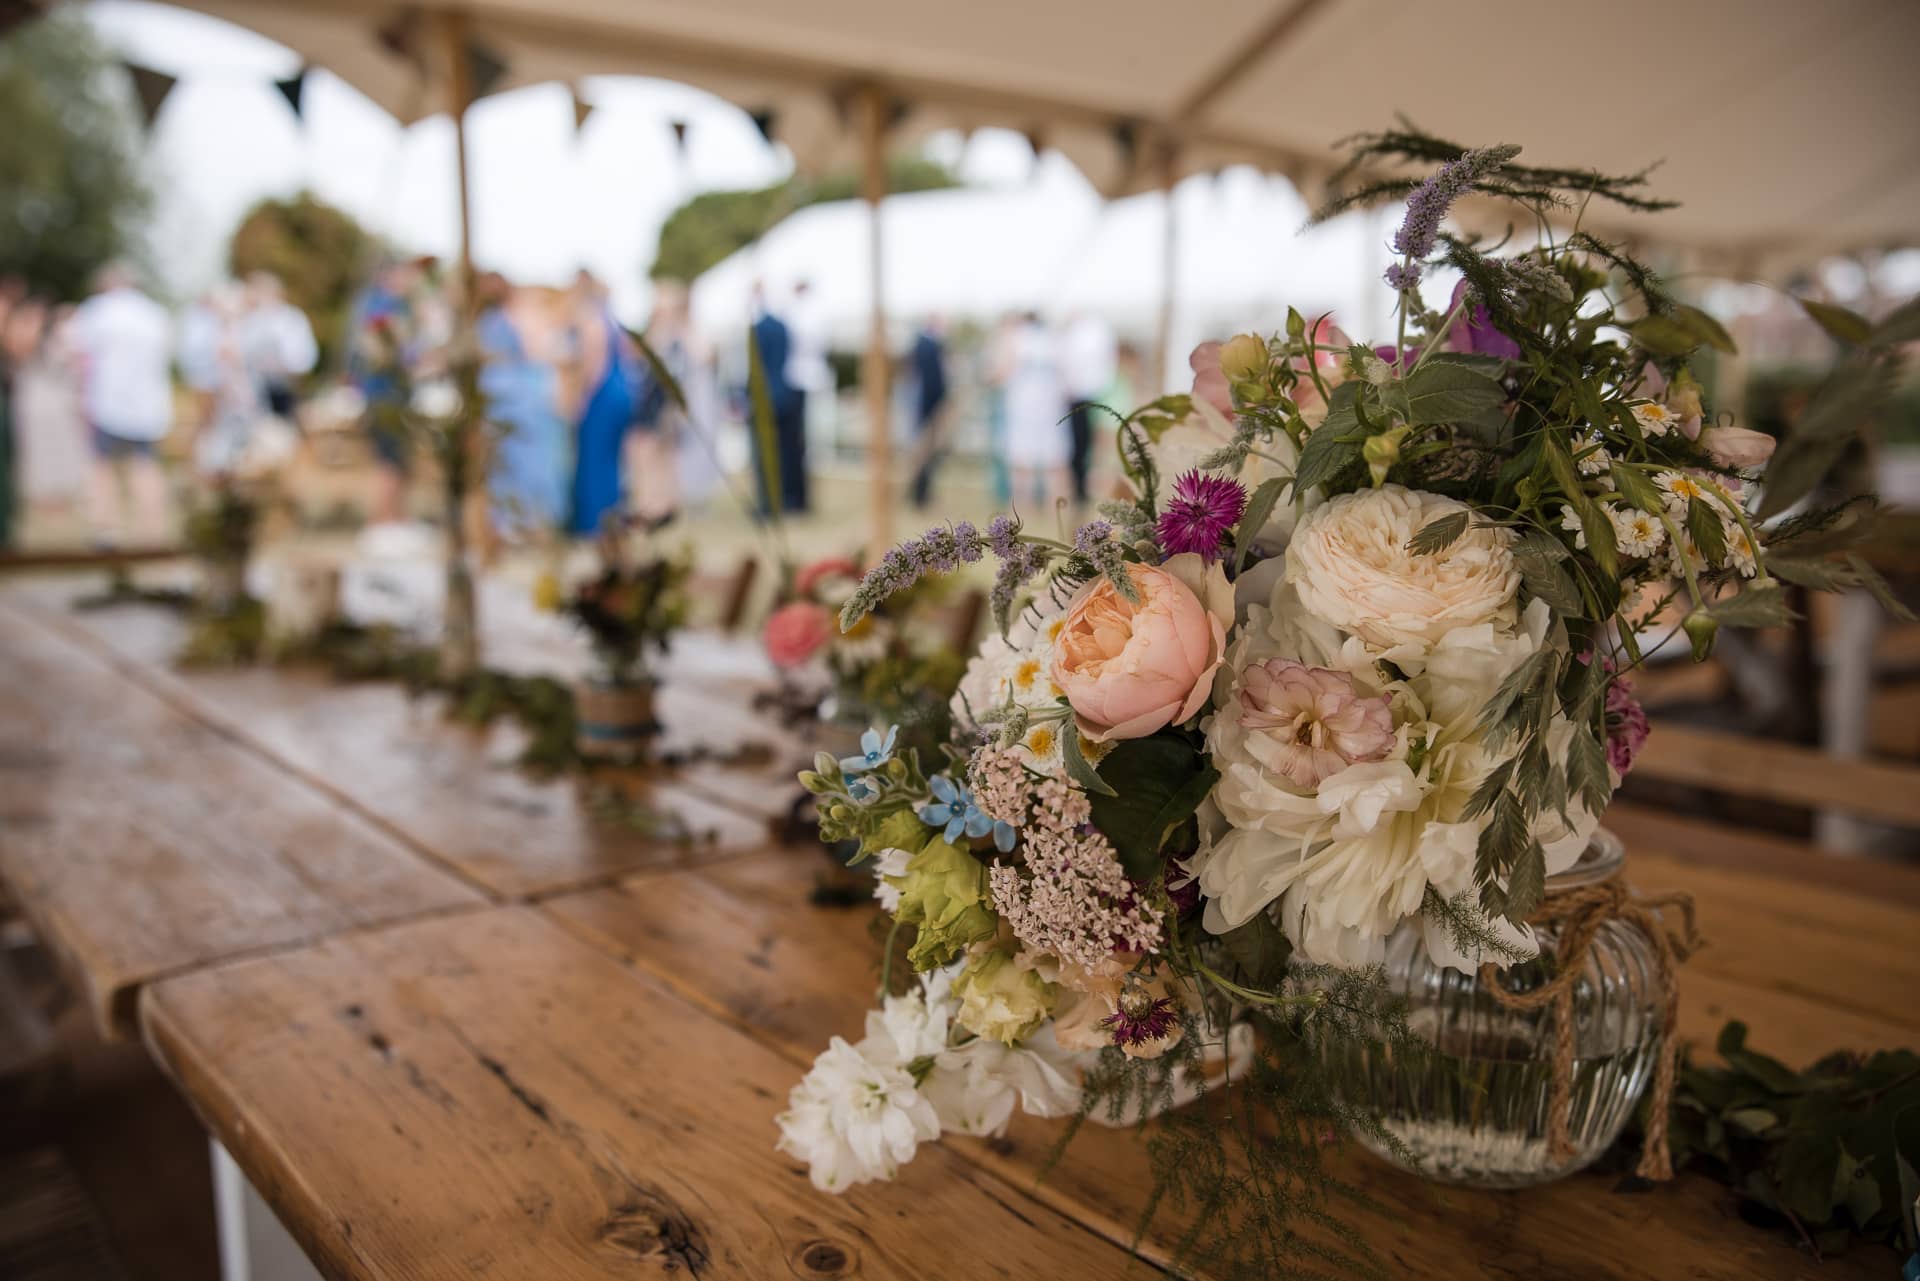 Table flowers at the Sandhurst Farm Wedding Reception